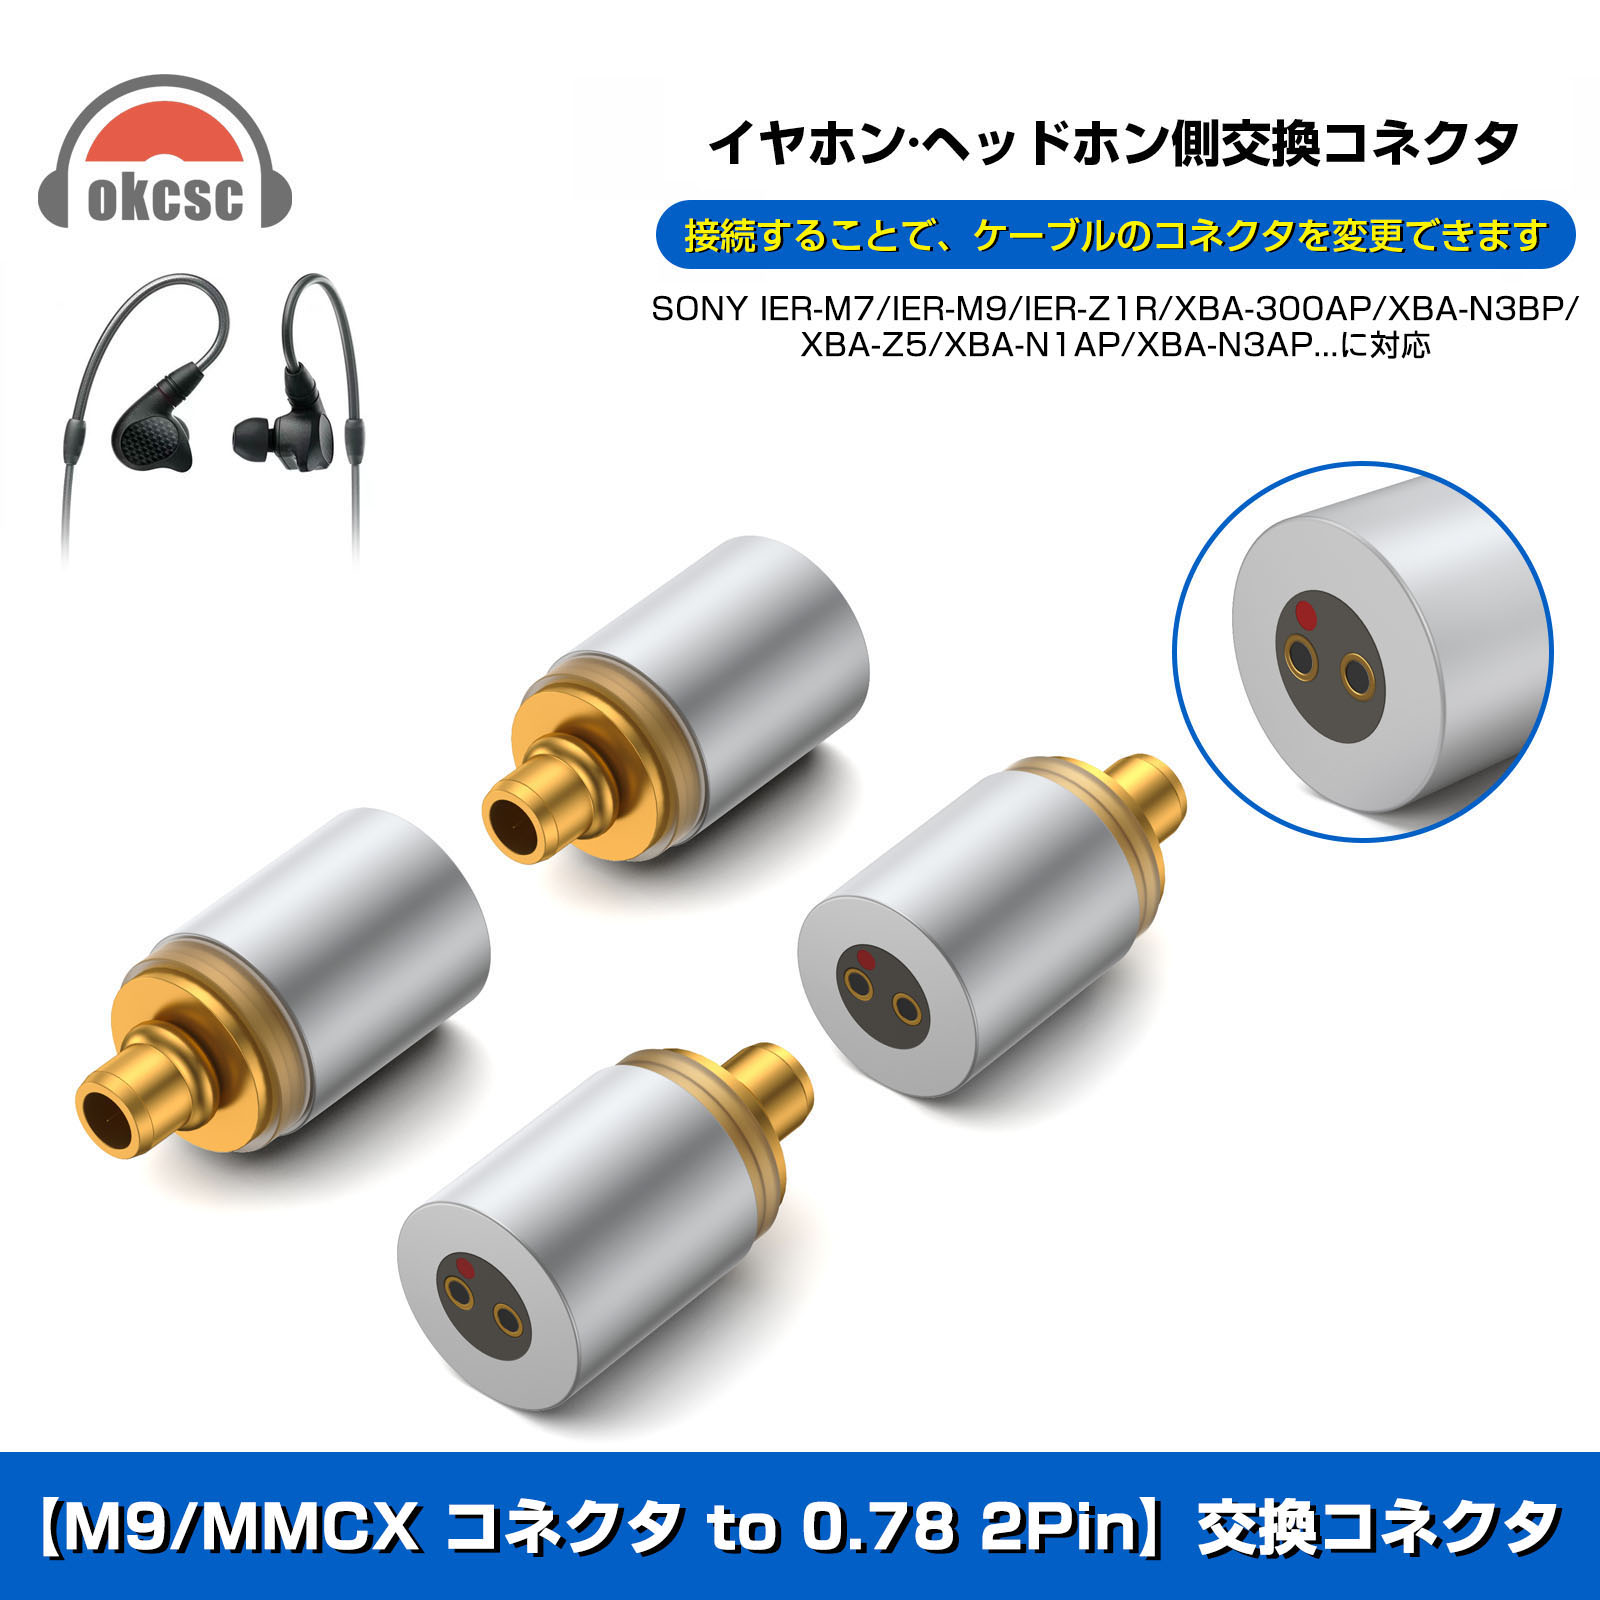 okcsc 0.78 2pin(リケーブル側) to (M9)mmcx(イヤホン側) アダプター コネクター 純銅メッキプラグ音質劣化なし簡潔 精緻 線材テスト作業用 ミニタイプ SONY IER-M7 IER-M9 IER-Z1R XBA-300APに対応